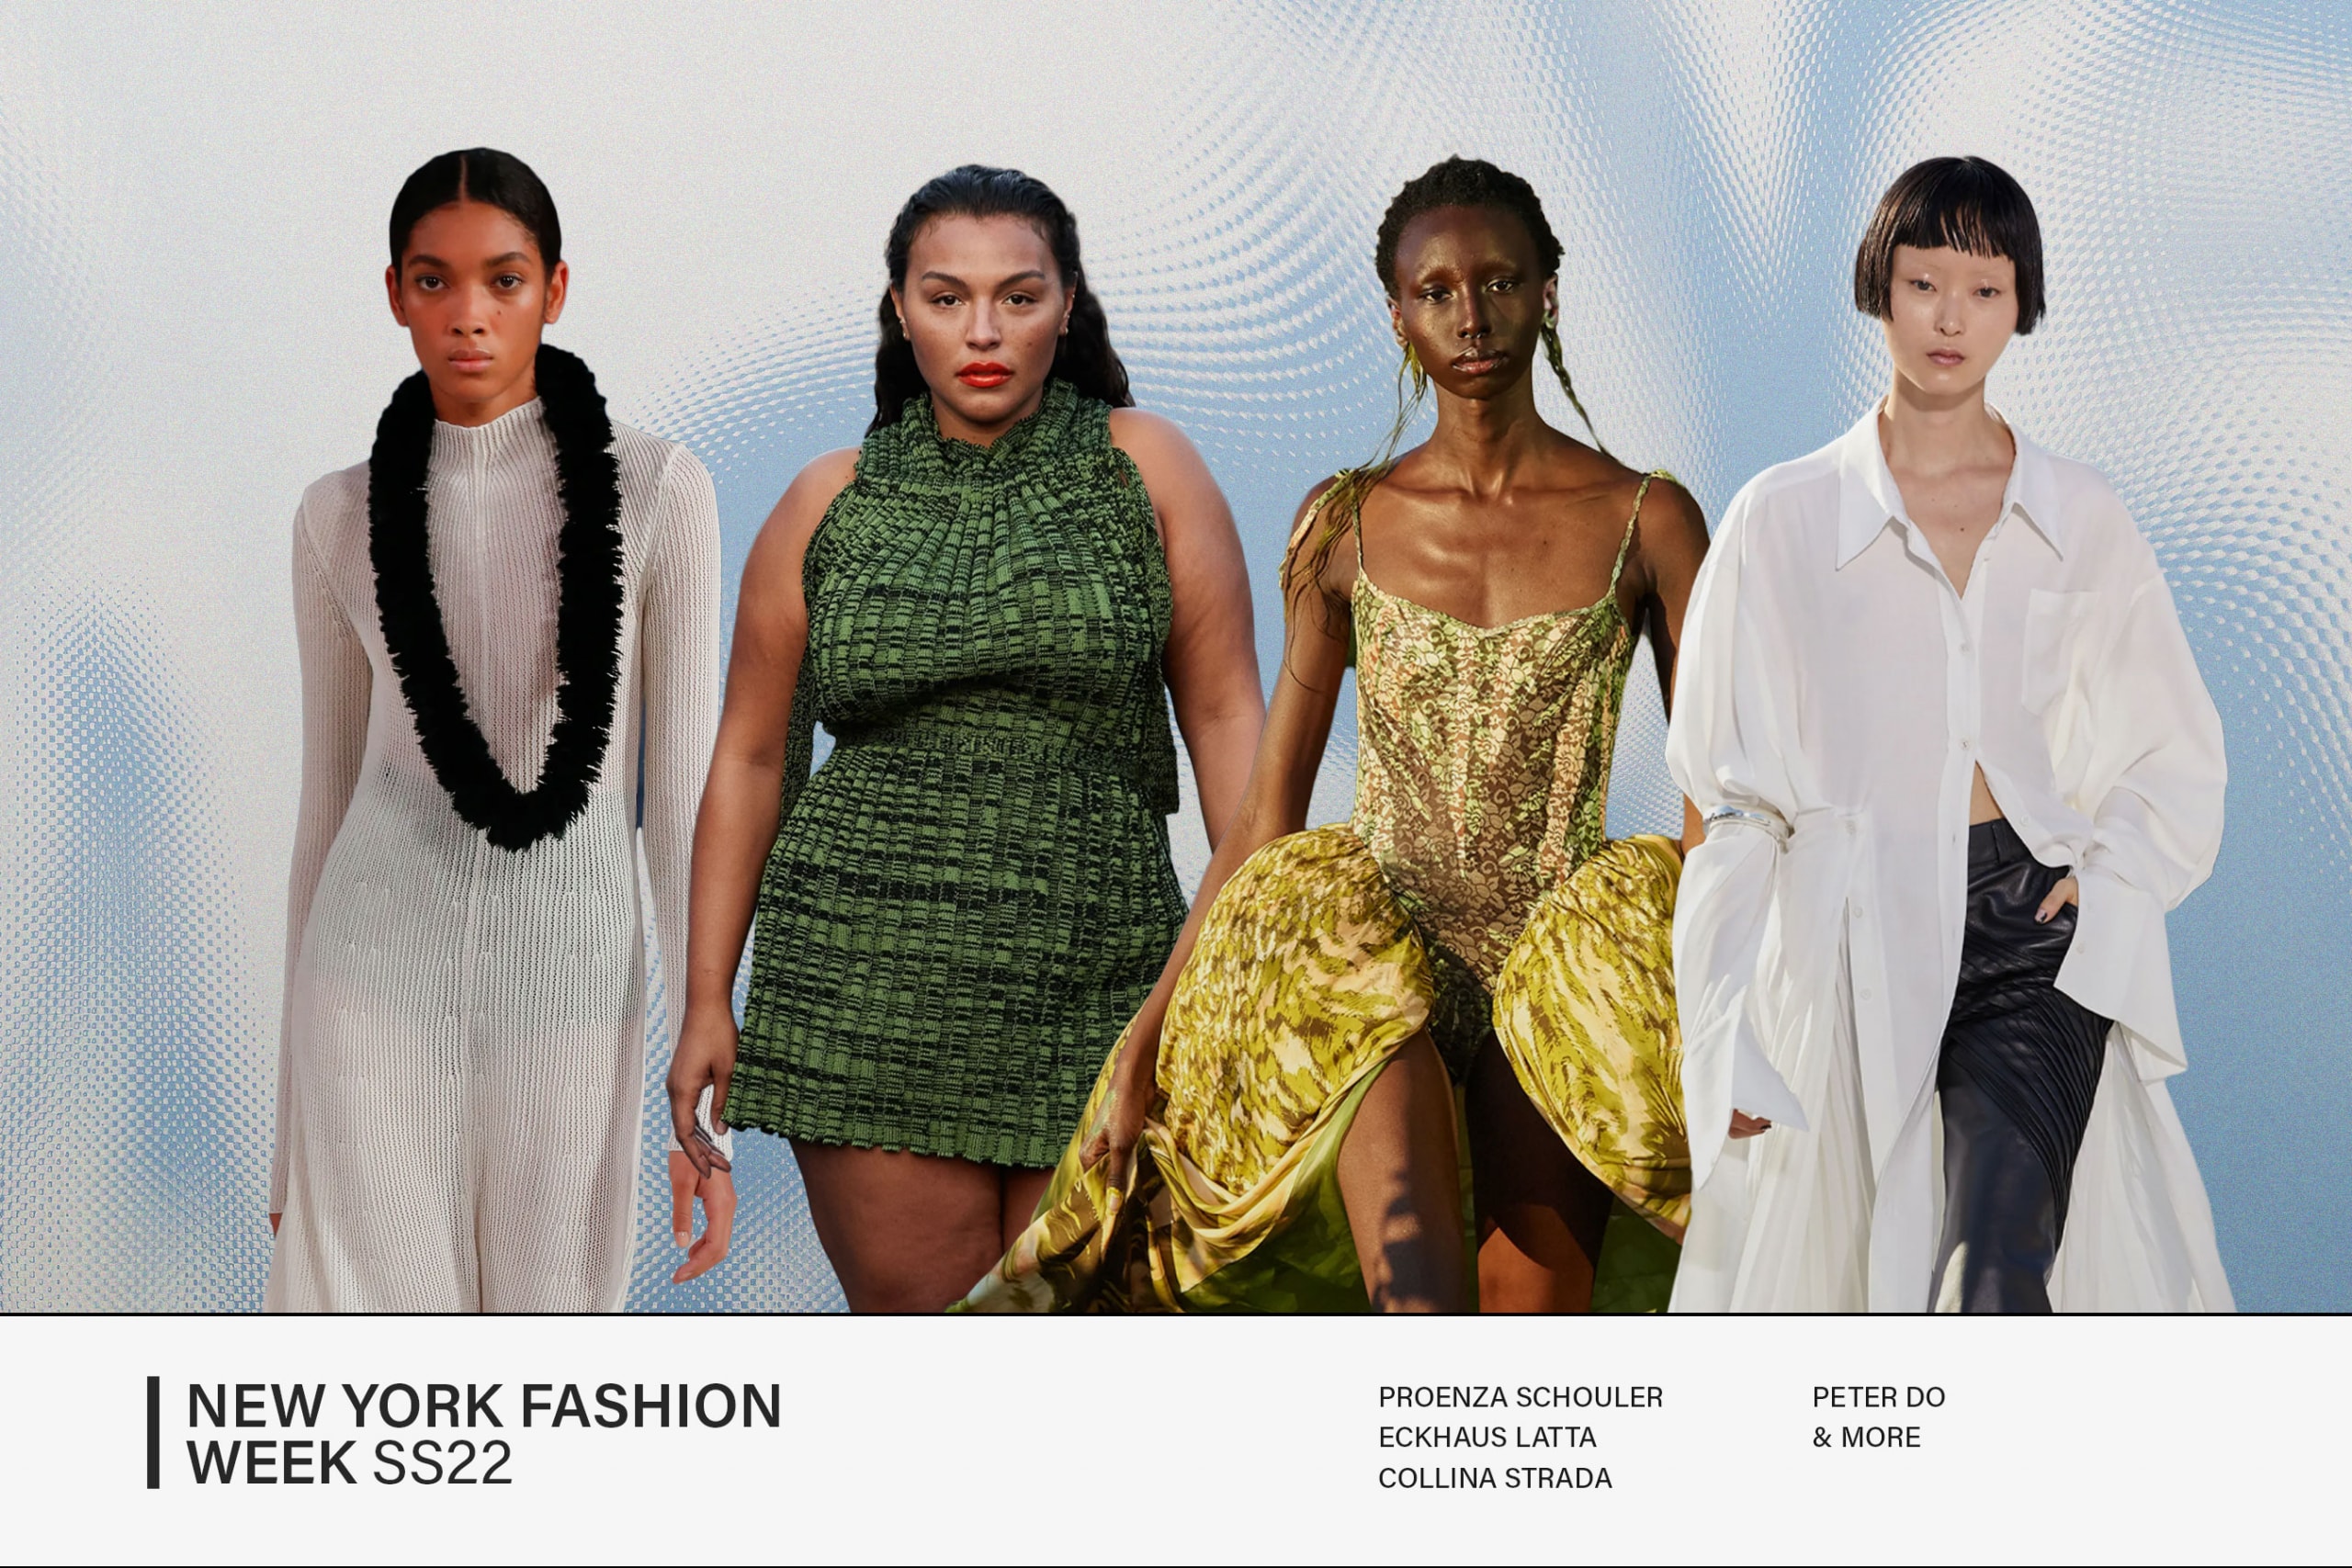 NYFW New York Fashion Week SS22 Spring/Summer 2022 Best Fashion Shows